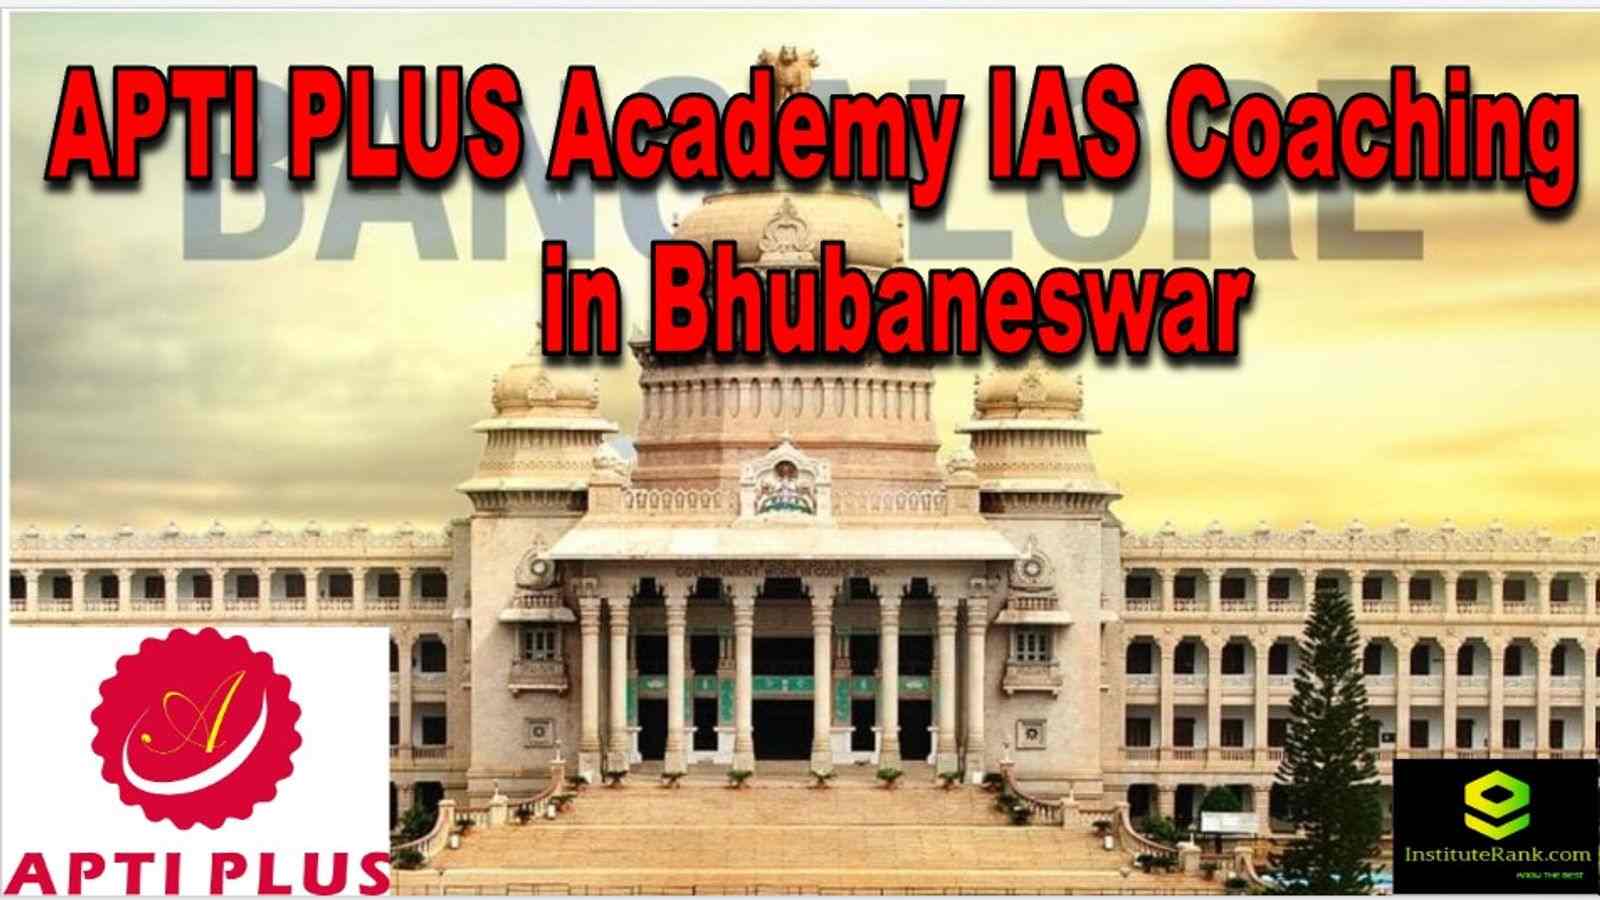 APTI PLUS Academy IAS Coaching in Bhubaneswar | IAS Coaching in ...